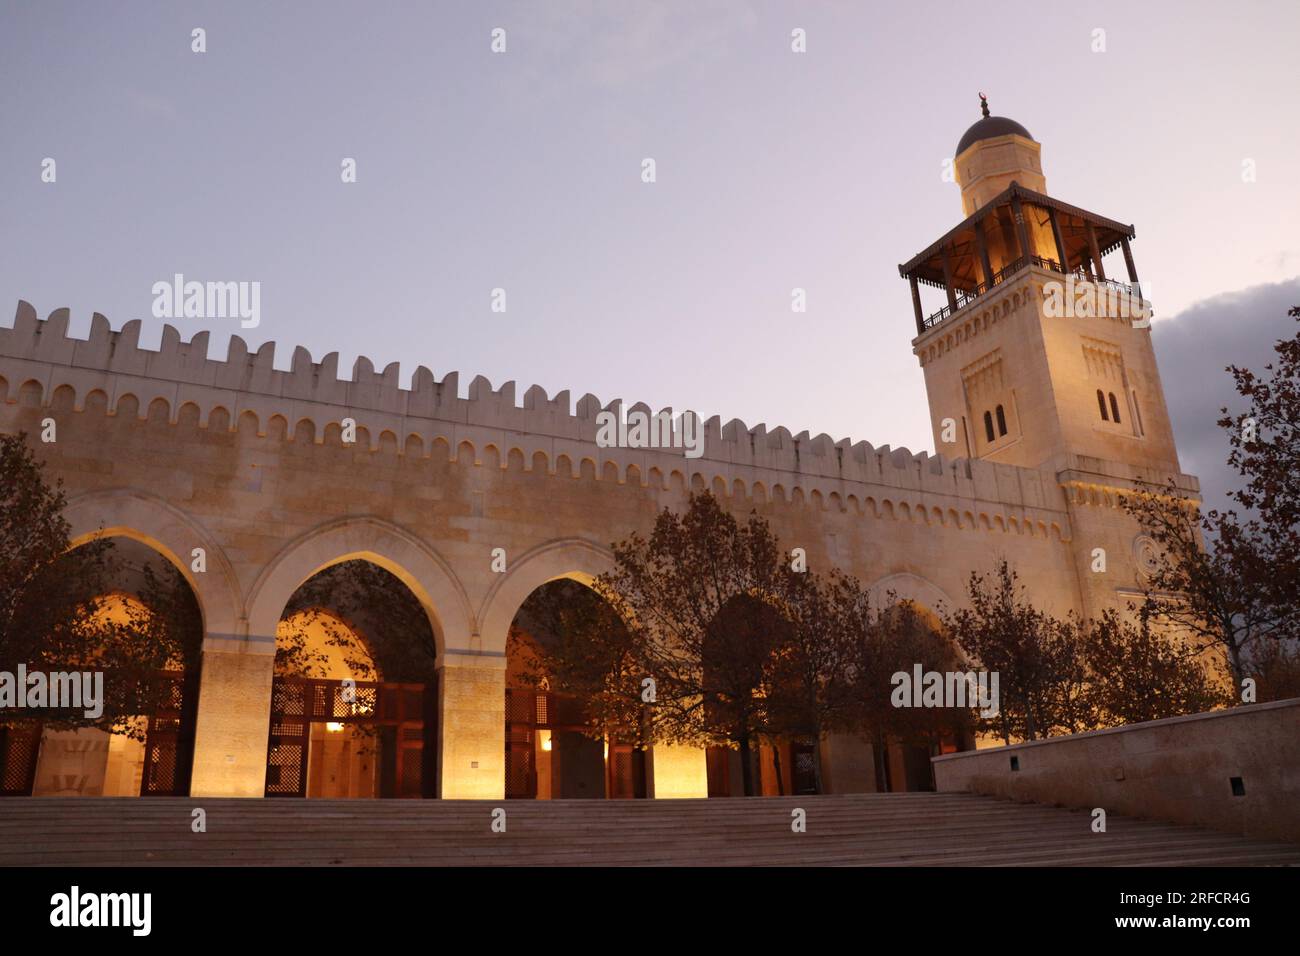 Arab Islamic mosque in Amman, Jordan - minaret, yellow lights, trees in autumn (King Hussein Bin Talal Mosque) Stock Photo